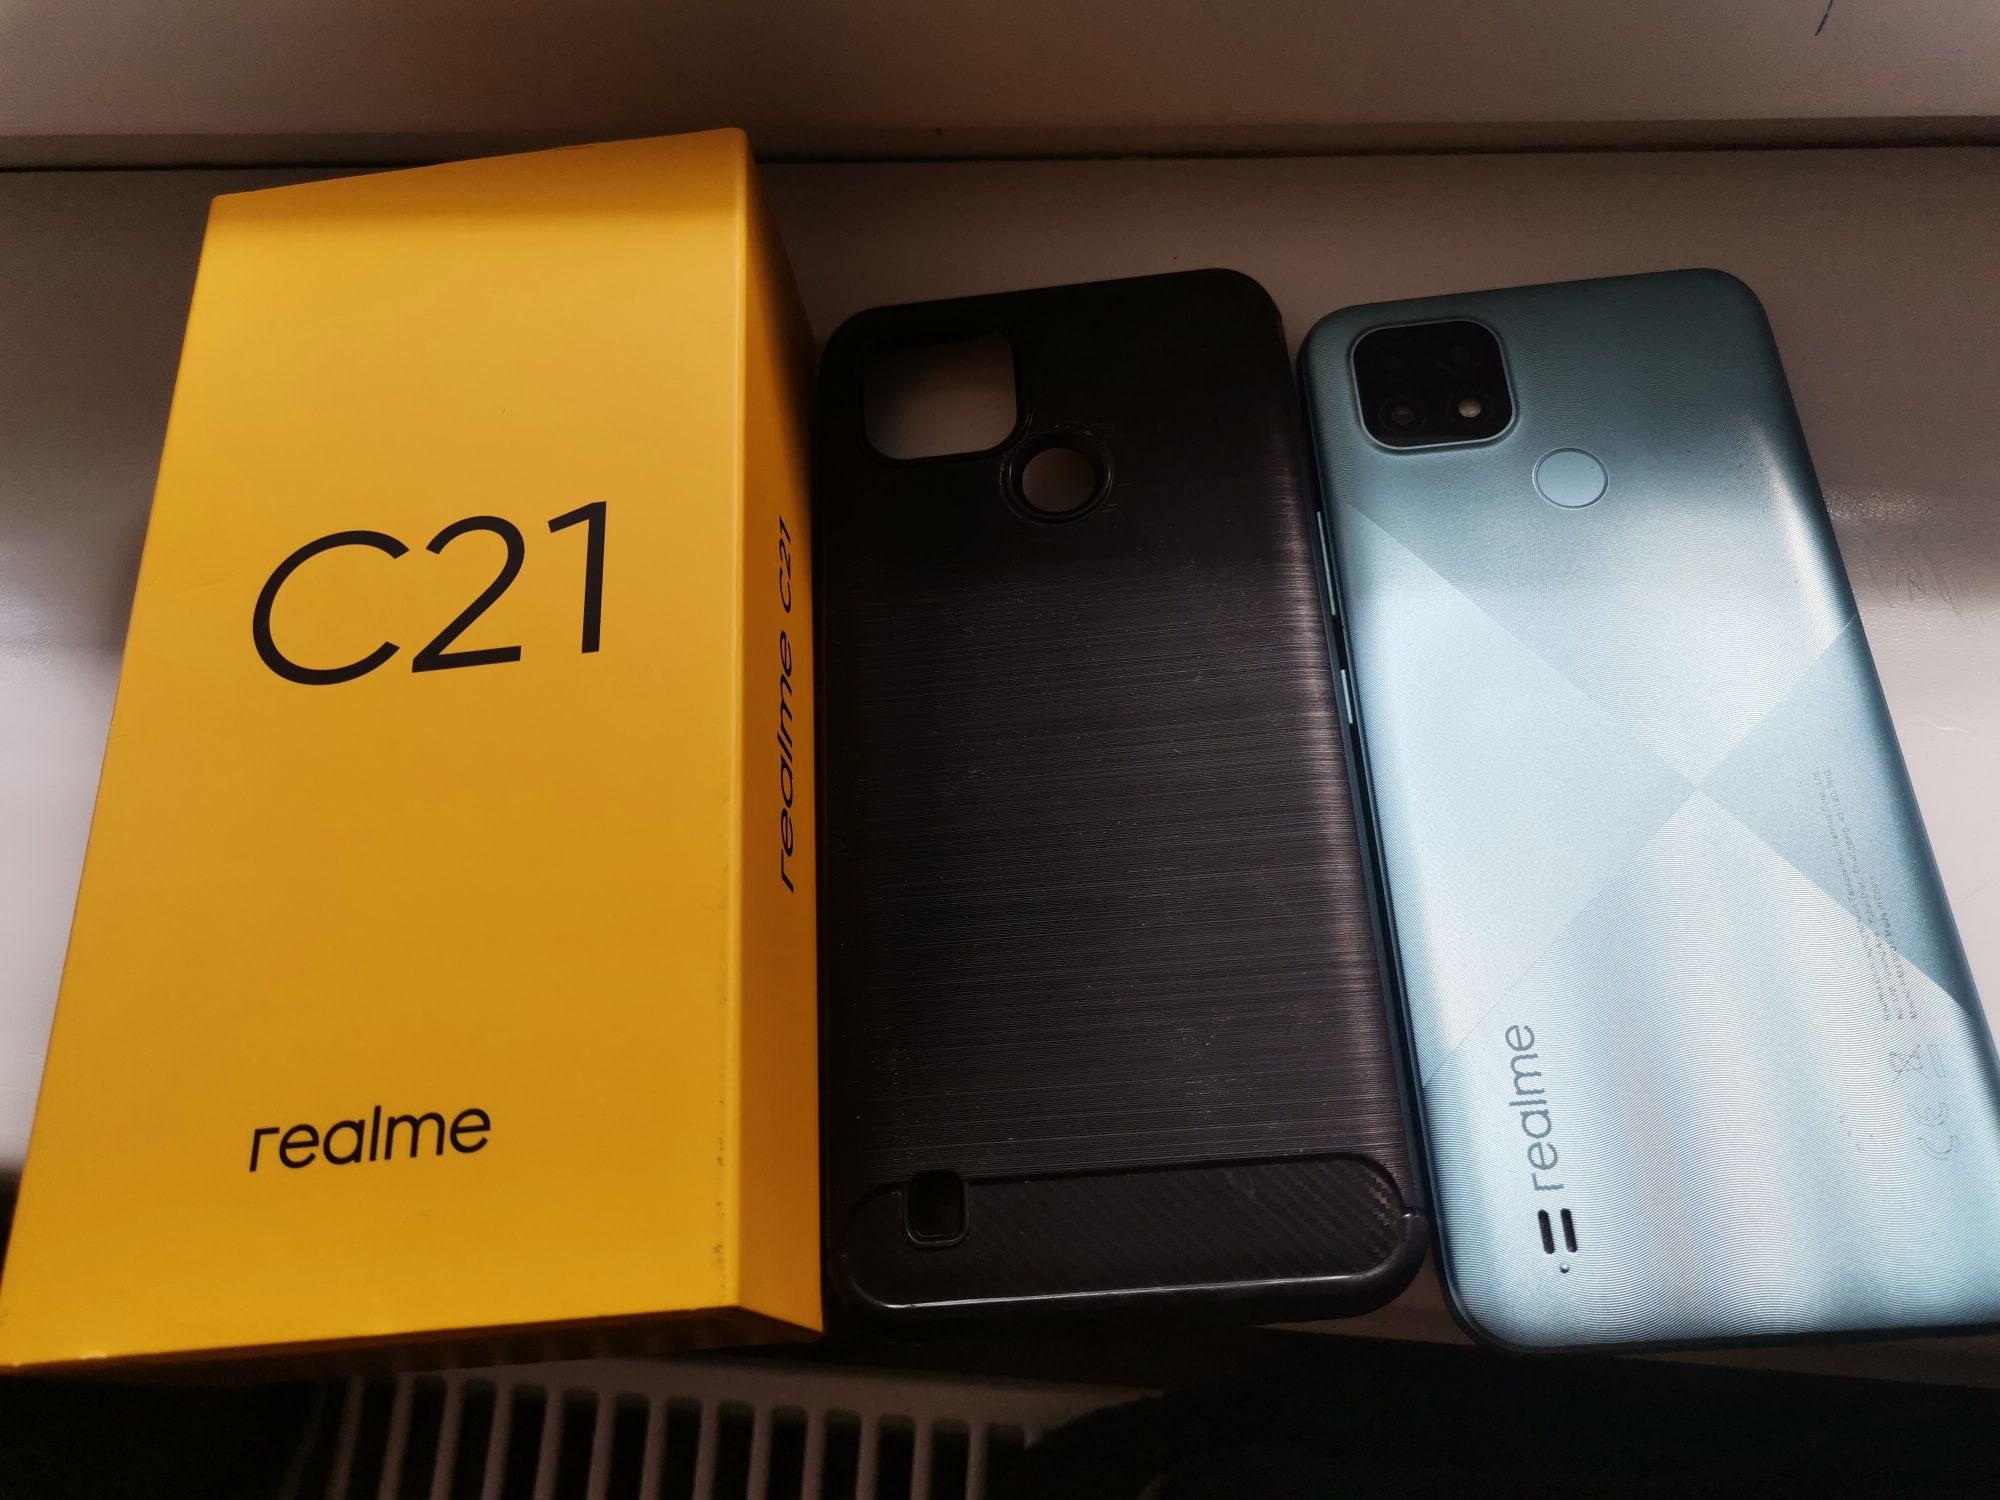 Smarphone Realme c21